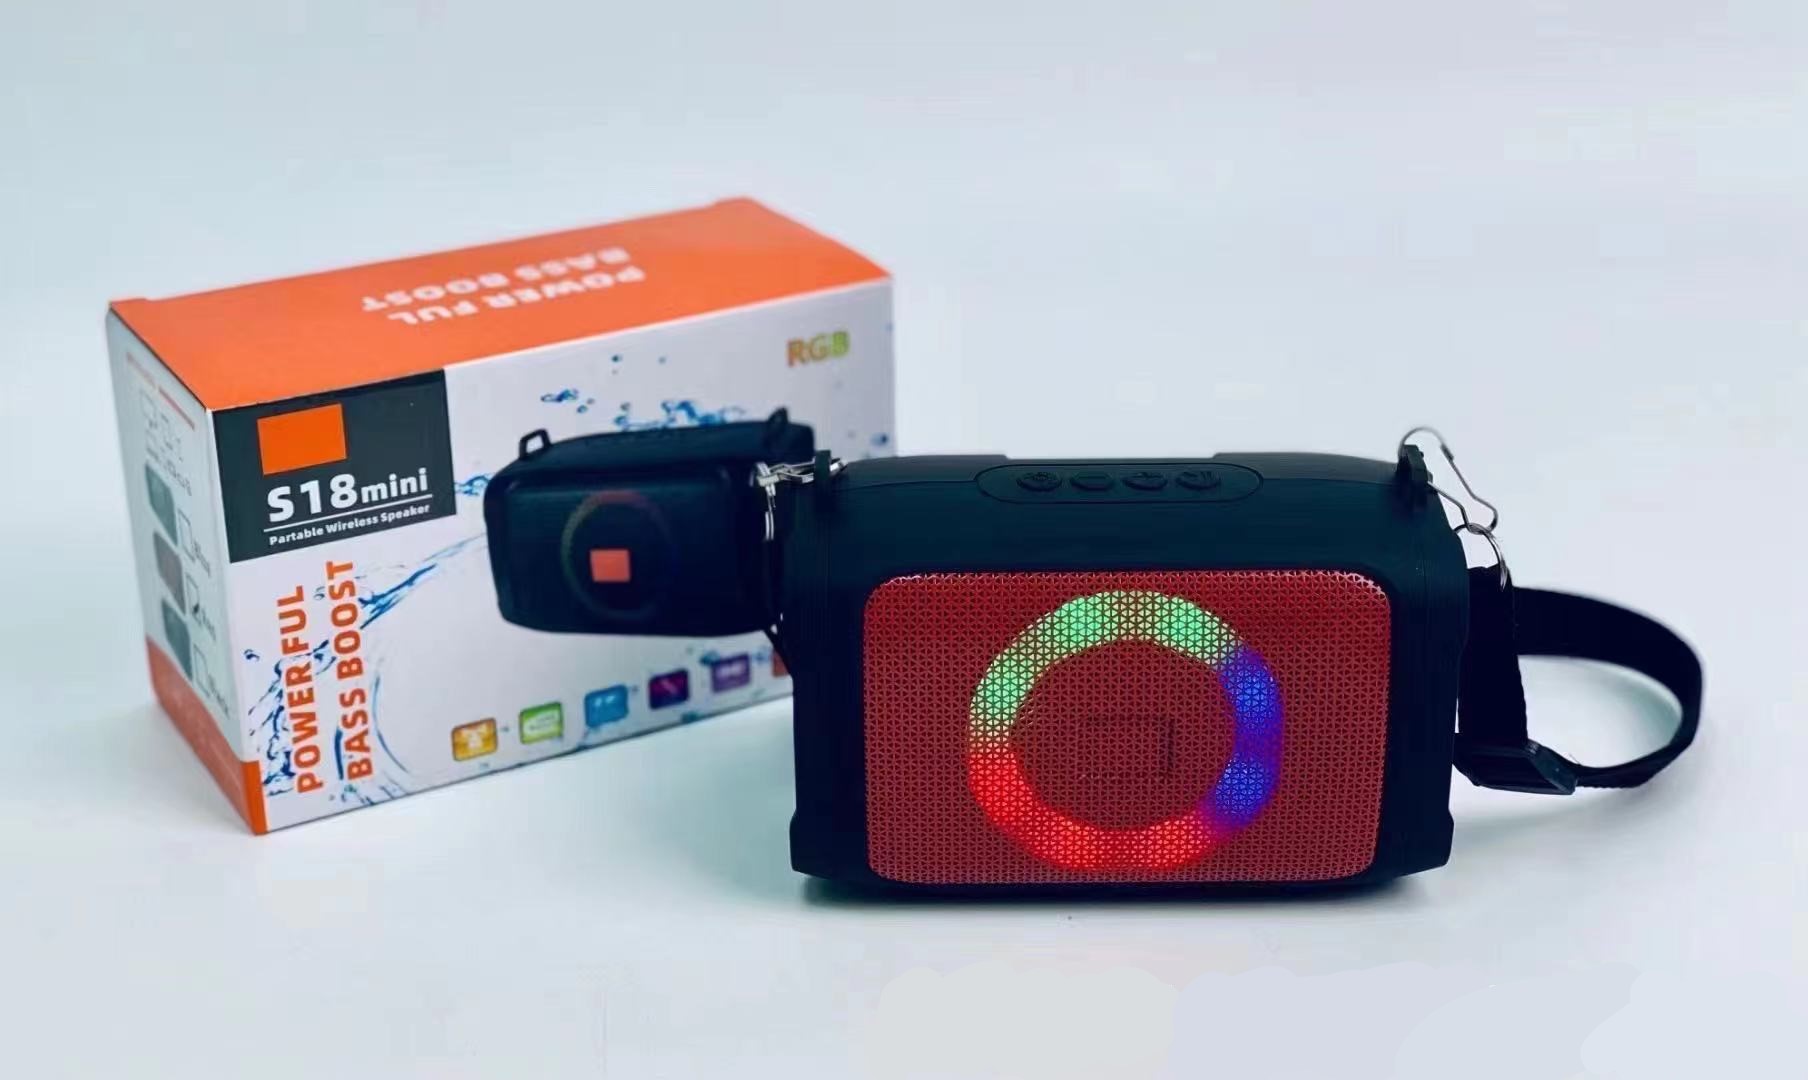 Cube Drum Style LED Light Portable Wireless Bluetooth Speaker S18mini (Red)